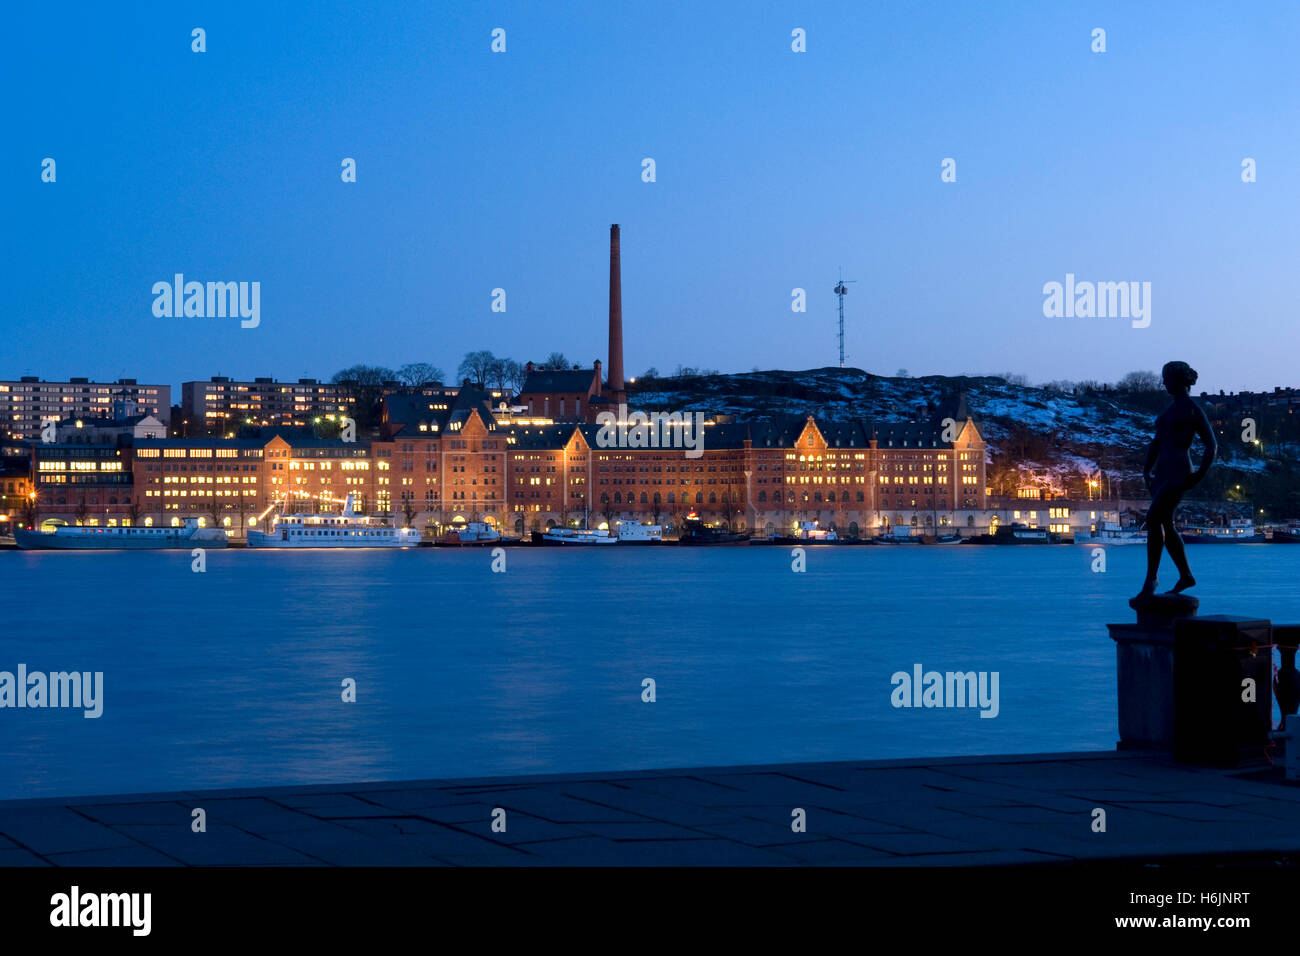 Sodermalm, Riddarfjaerden, night shot, Stockholm, Sweden, Scandinavia, Europe Stock Photo